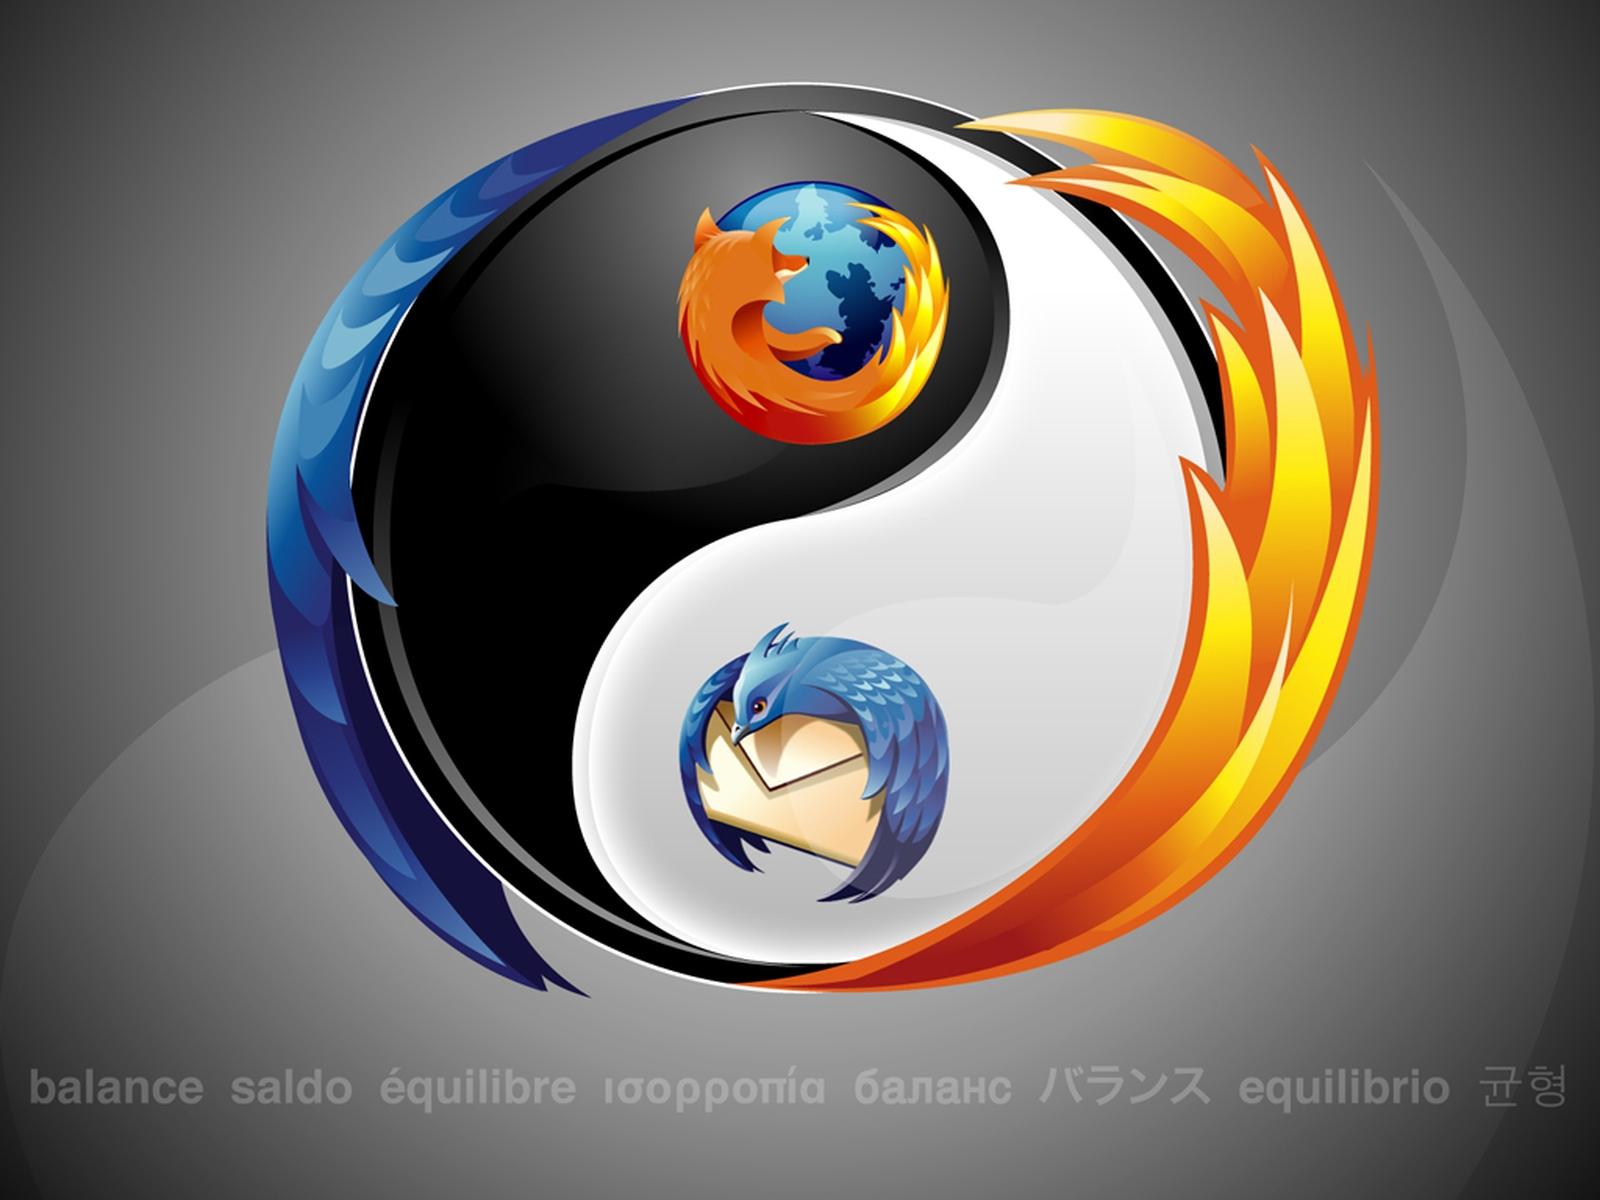 Awesome Mozilla Firefox Wallpaper Hq